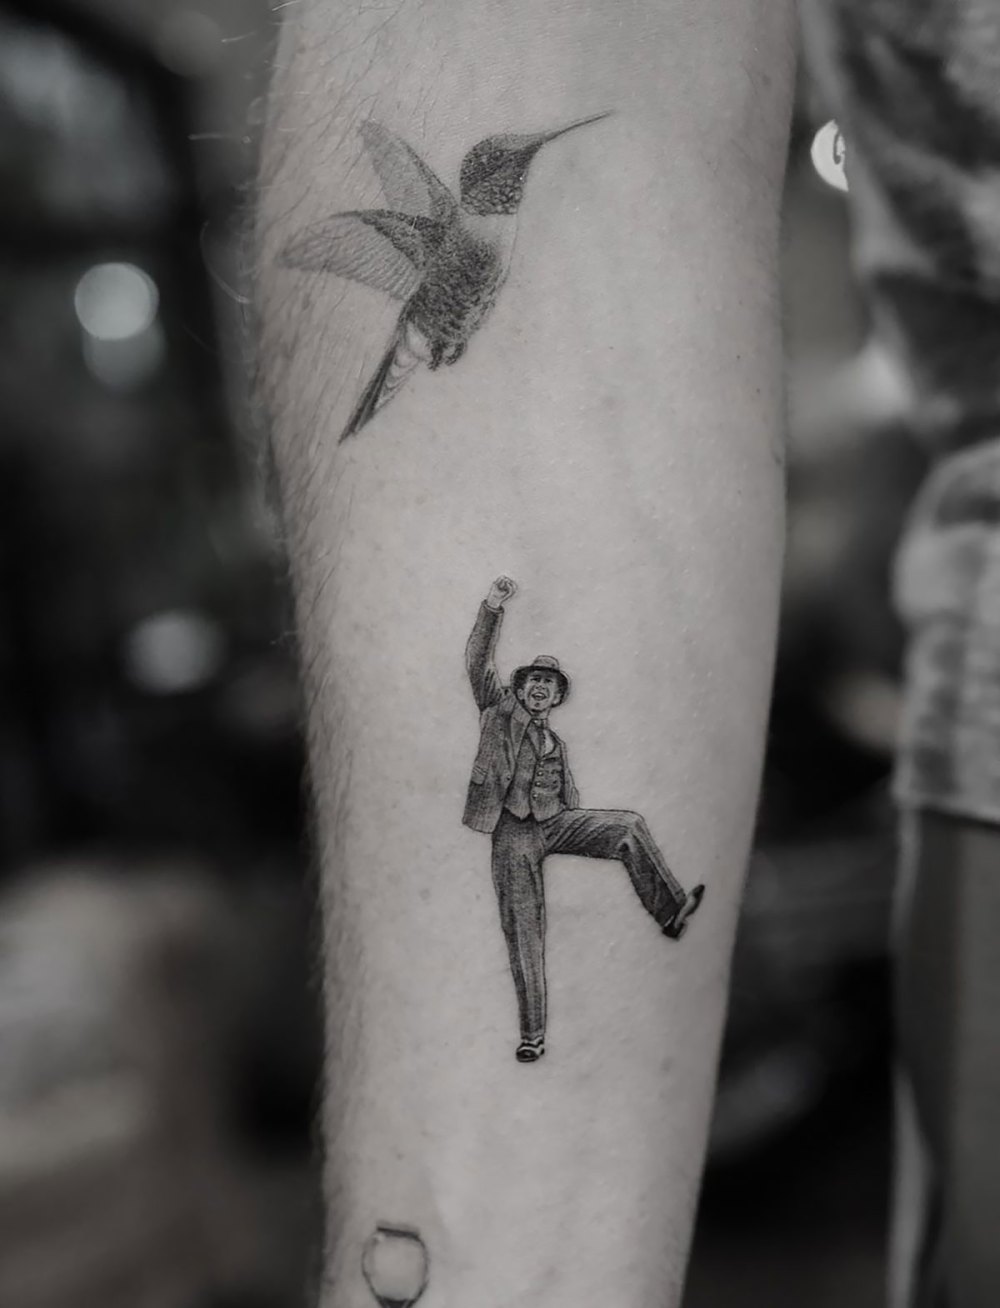 Zach Braff Gets Tribute Tattoo Honoring Late Friend Nick Cordero